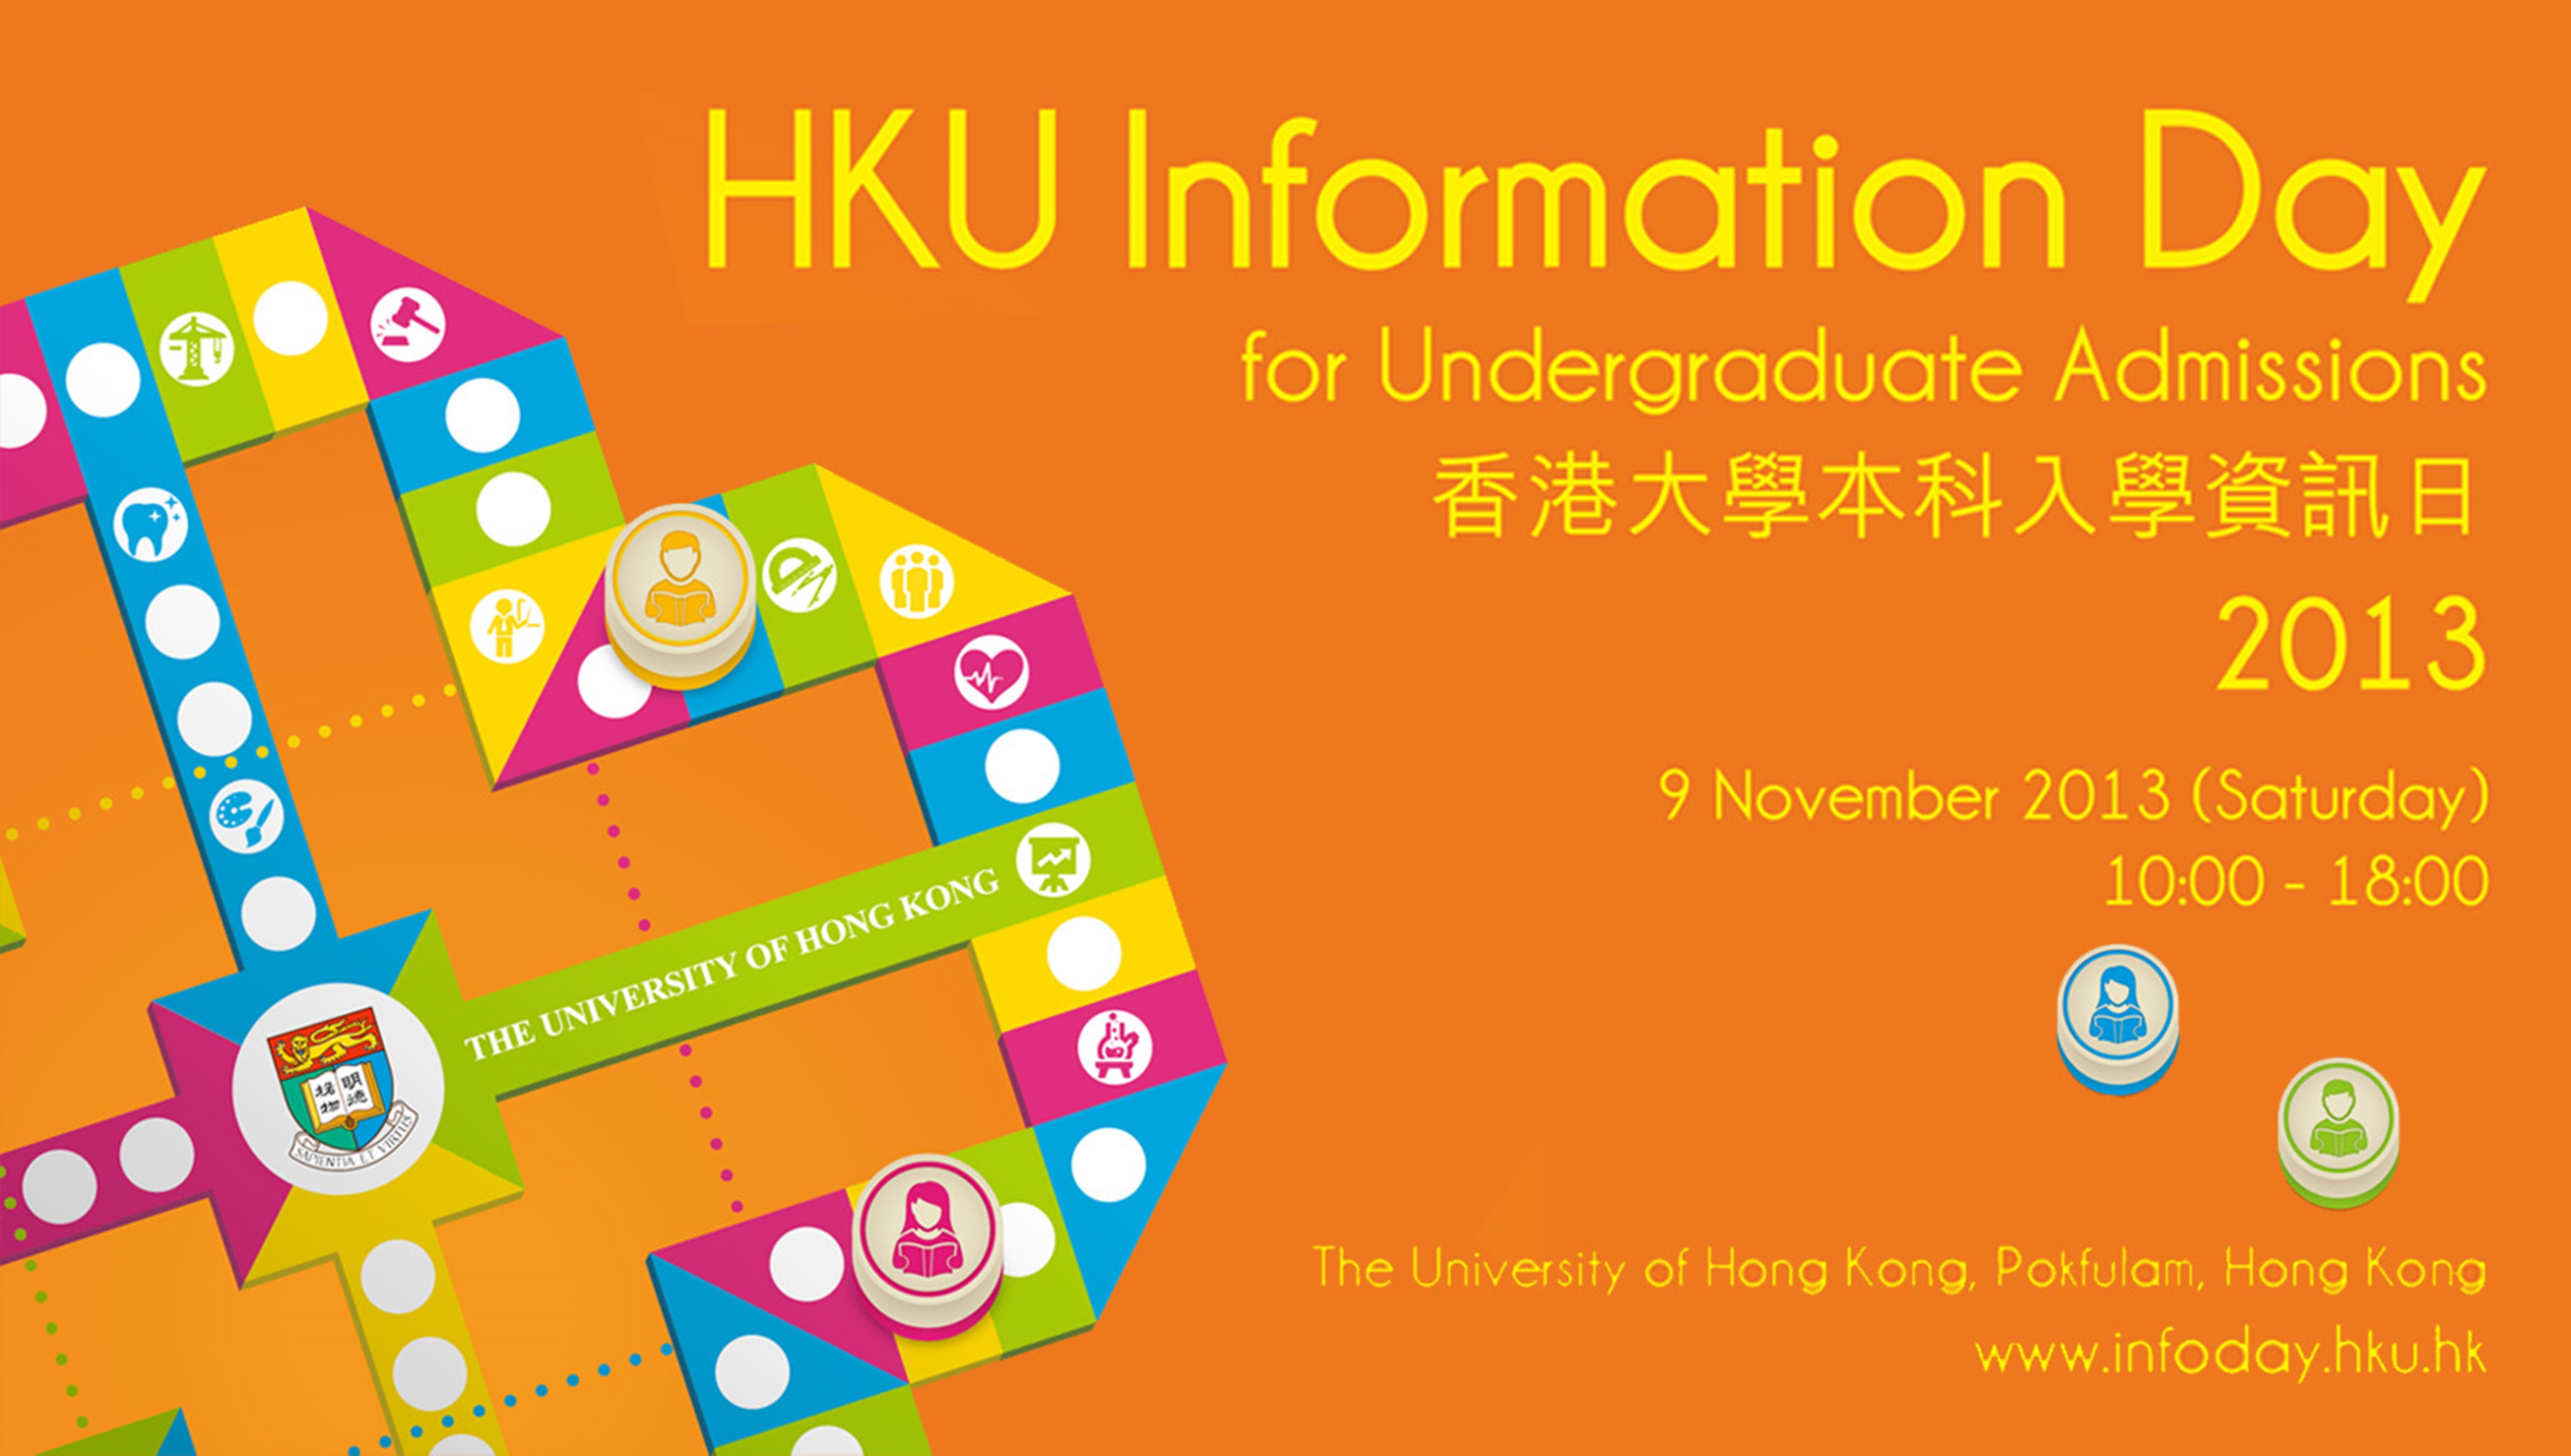 HKU Information Day 2013 - 9 November 2013